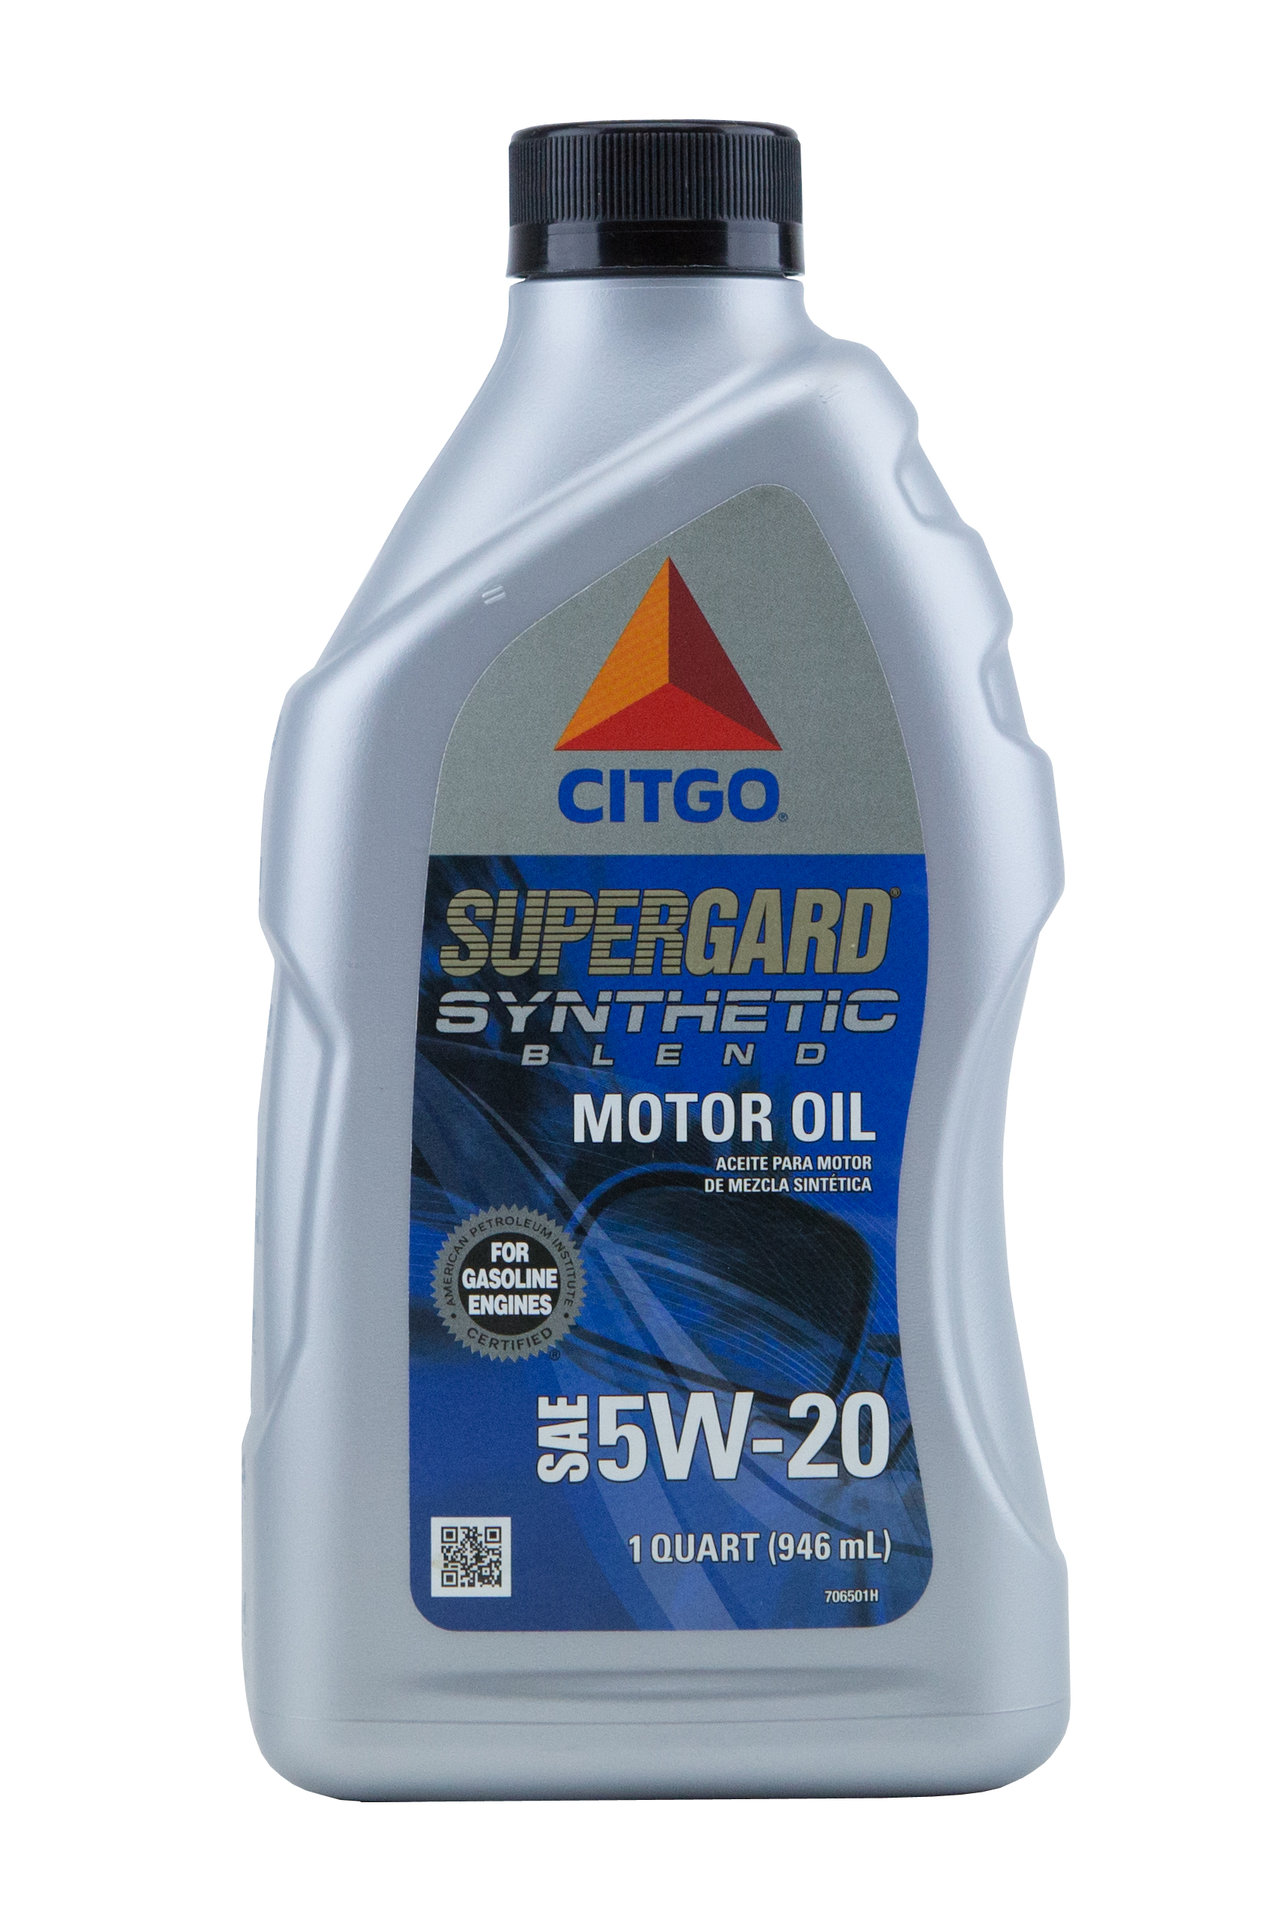 buy-citgo-supergard-5w20-motor-oil-12-1-qts-case-online-yoder-oil